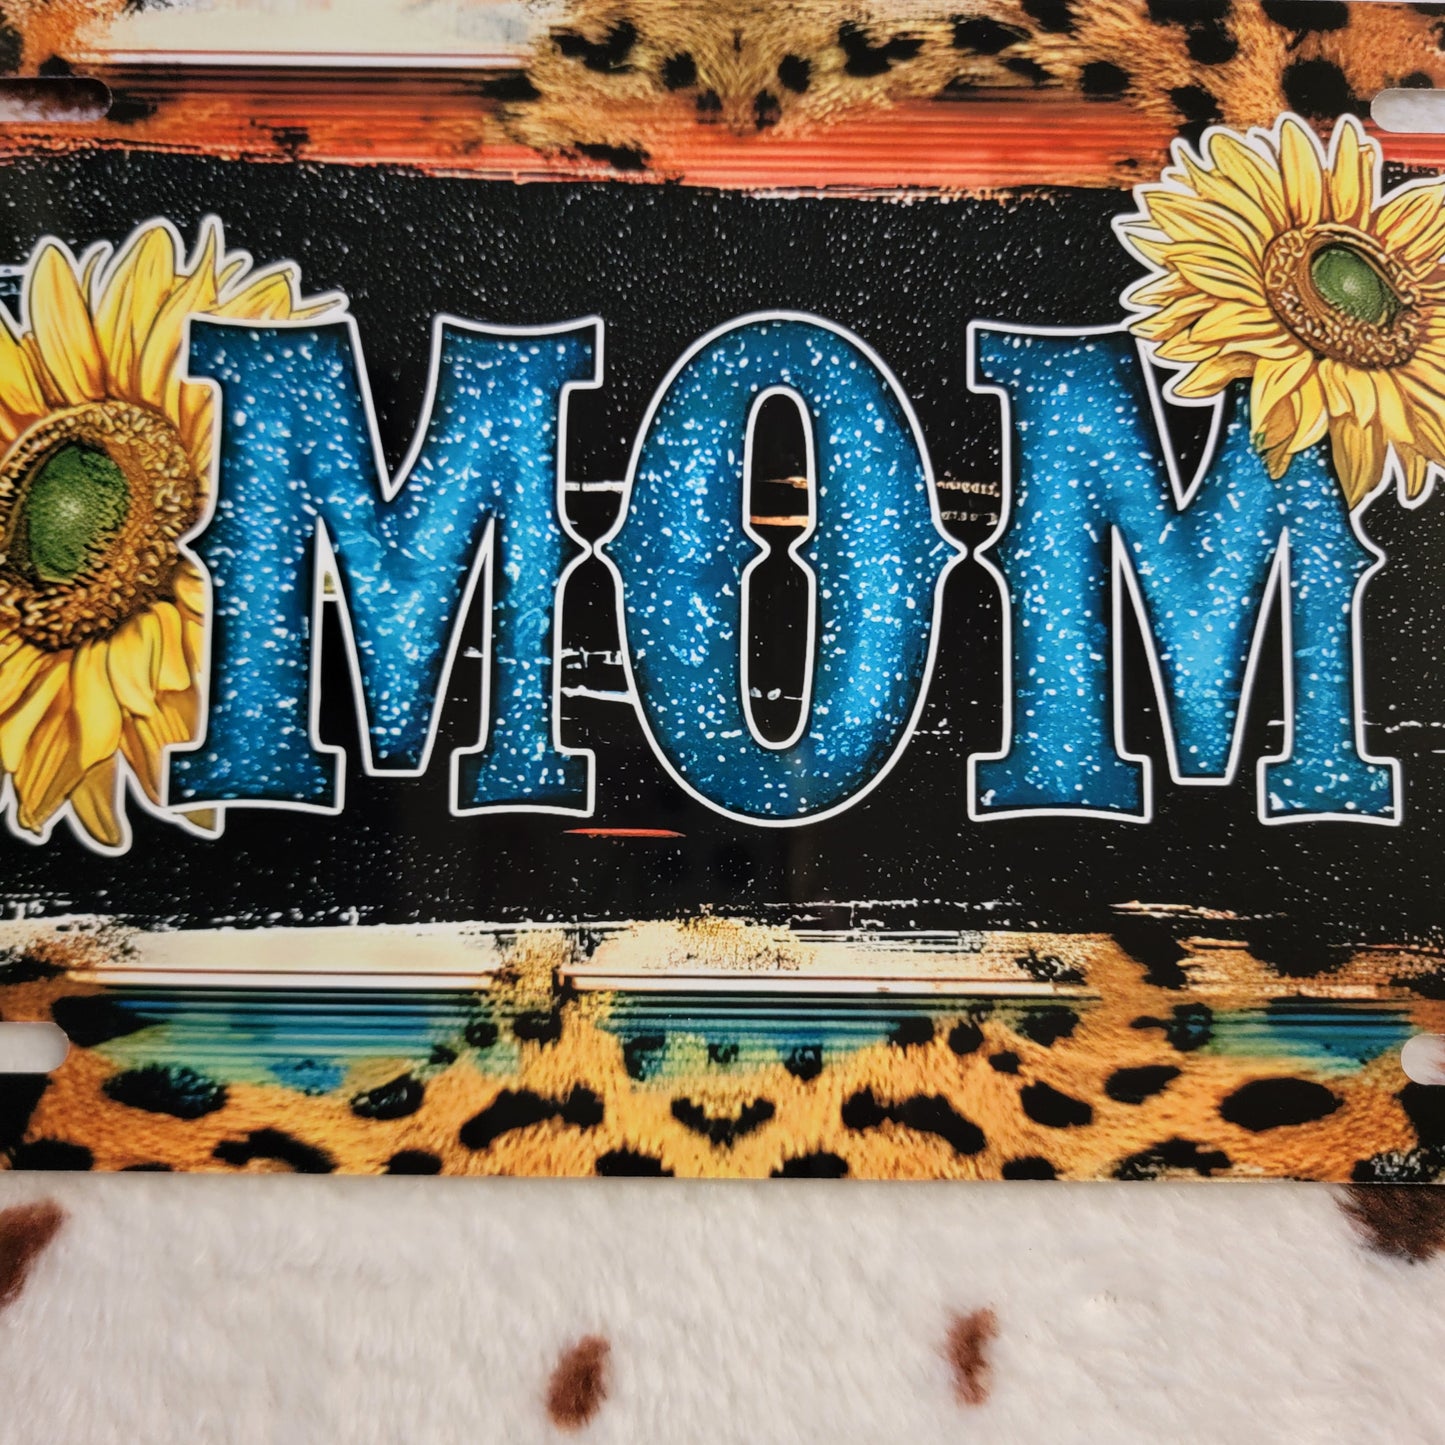 Mom Sunflower Western Car Tag License Plate